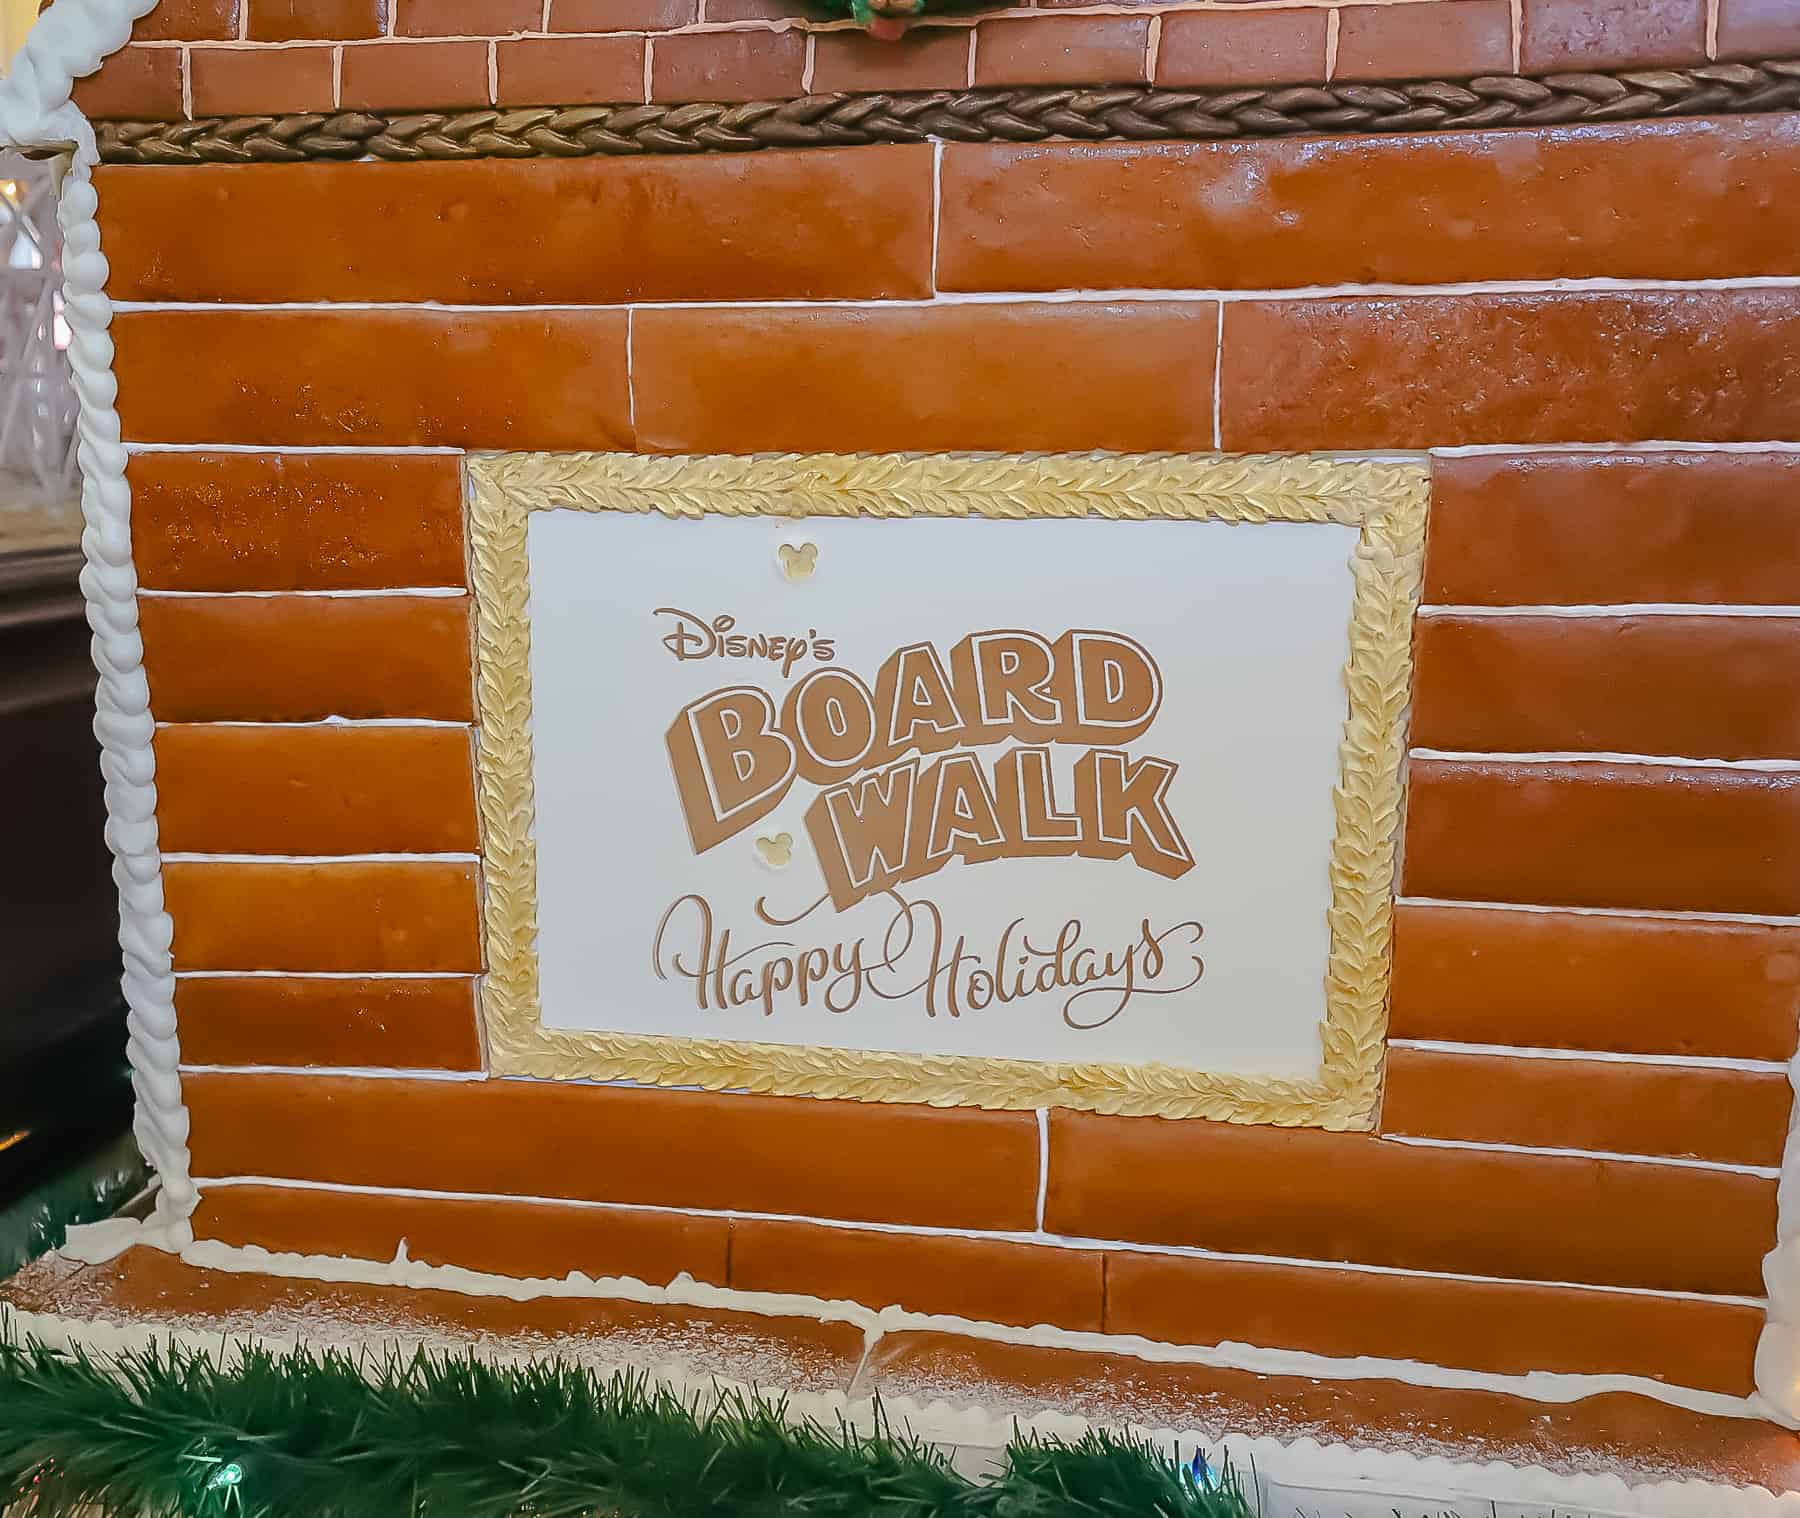 sign that says Disney's Boardwalk Happy Holidays in gold leaf 